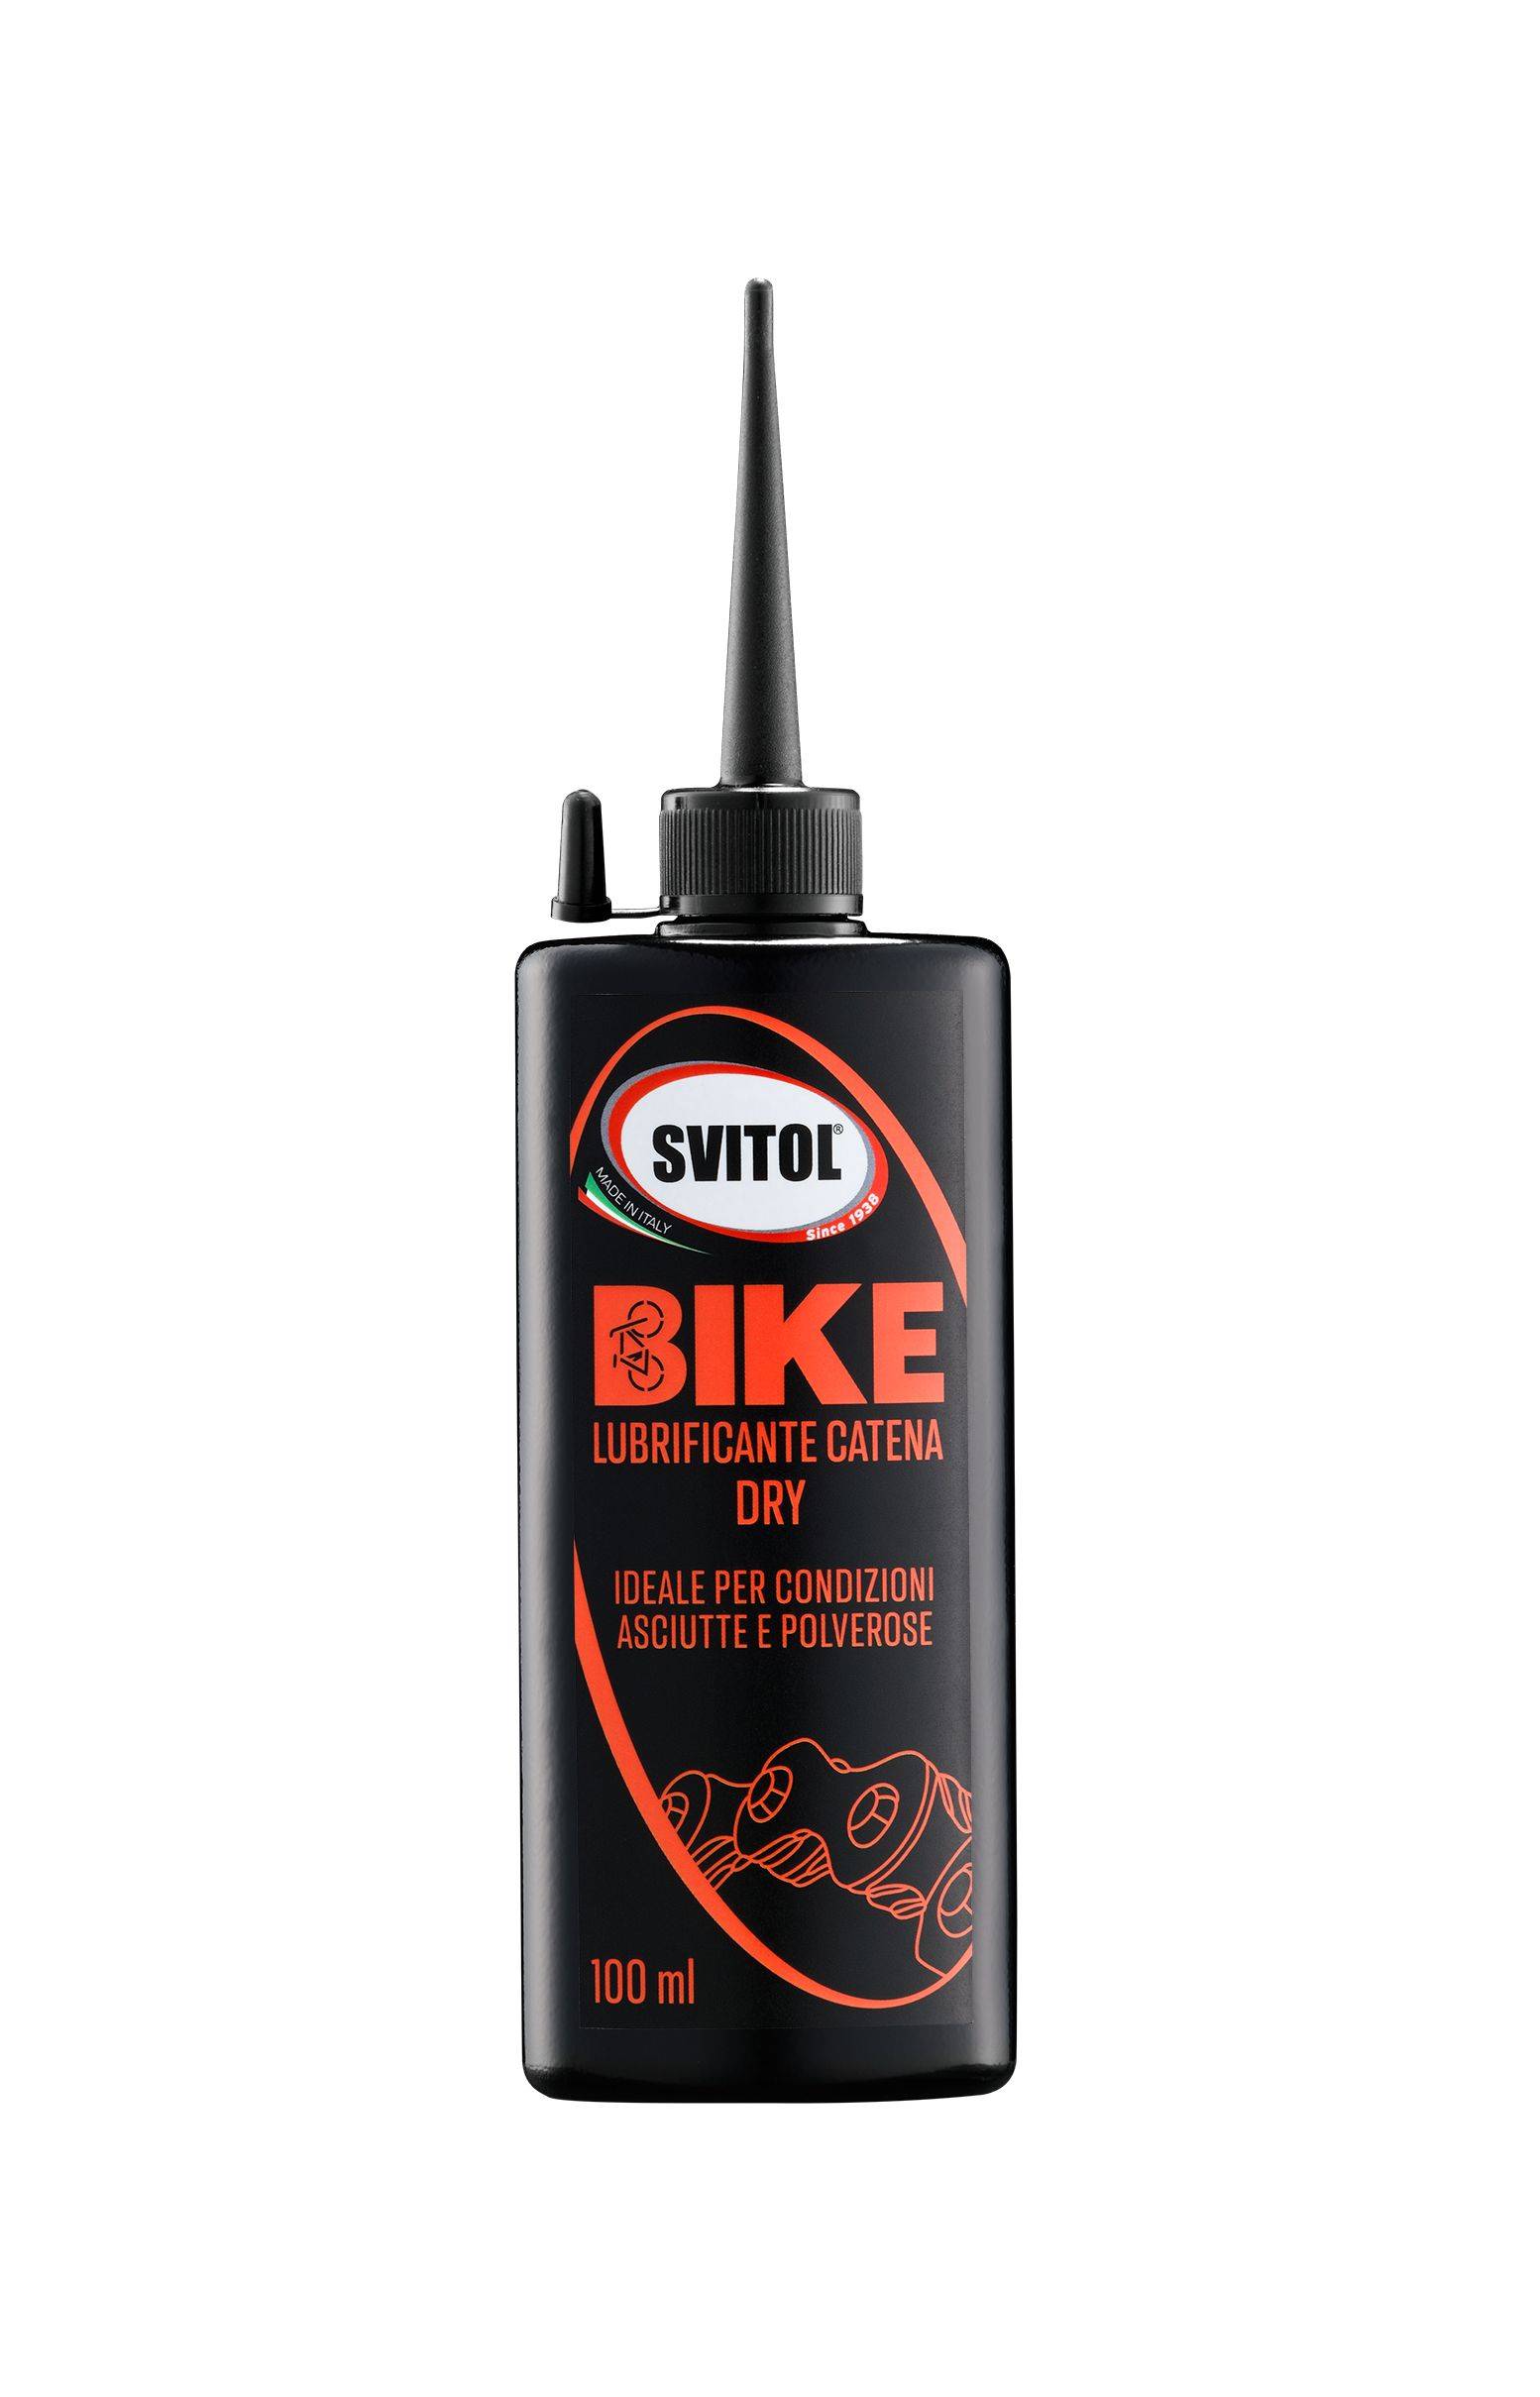 Svitol Bike – Lubrificante catena dry per condizioni asciutte 100 ml